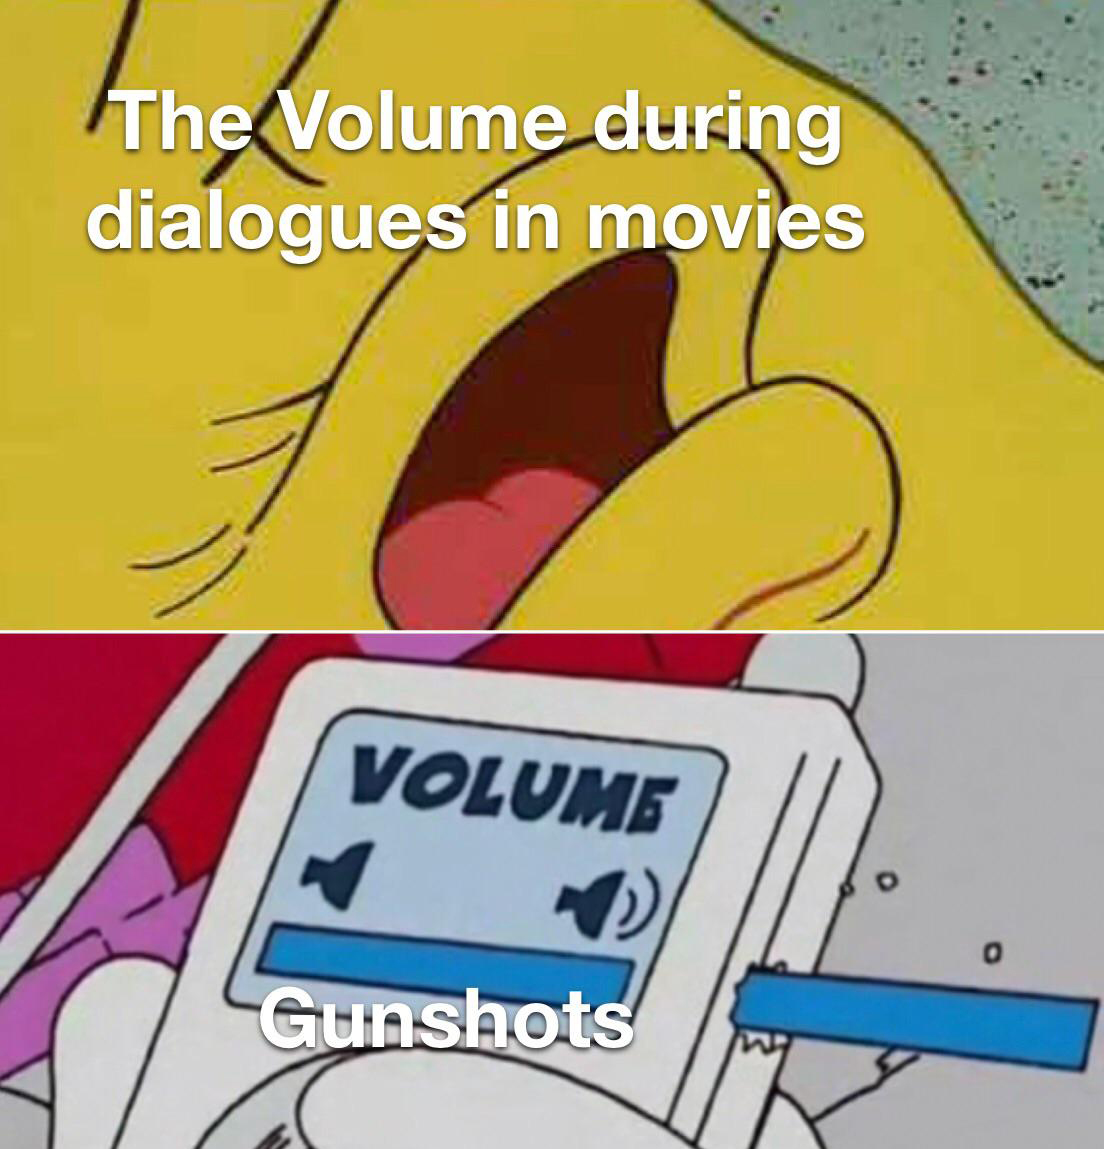 dank memes - funny memes - music meme twitter - The Volume during dialogues in movies Volume o Gunshots